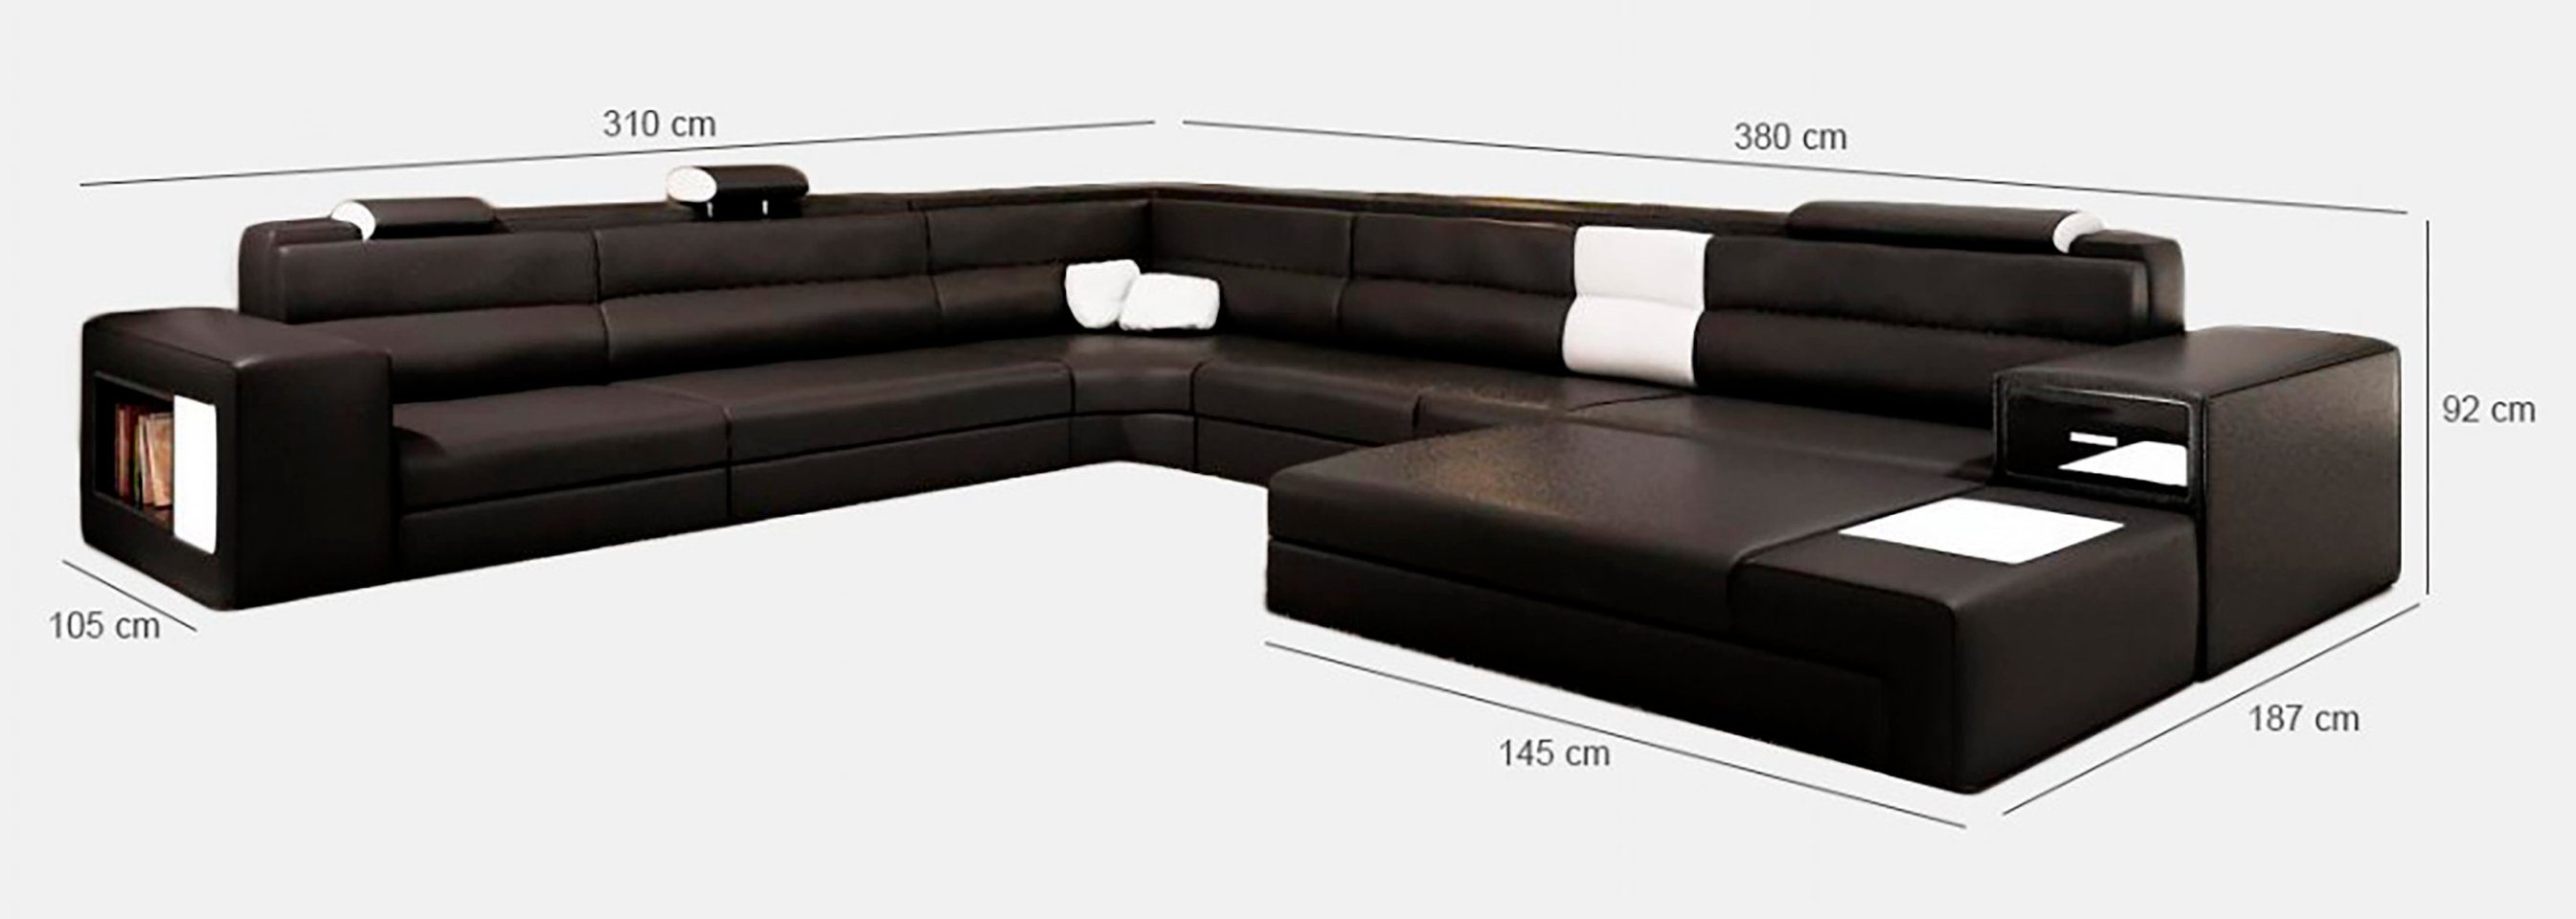 Textil Sofa Couch Polster Design Leder Landau Wohnlandschaft JVmoebel Ecksofa, Ecksofa